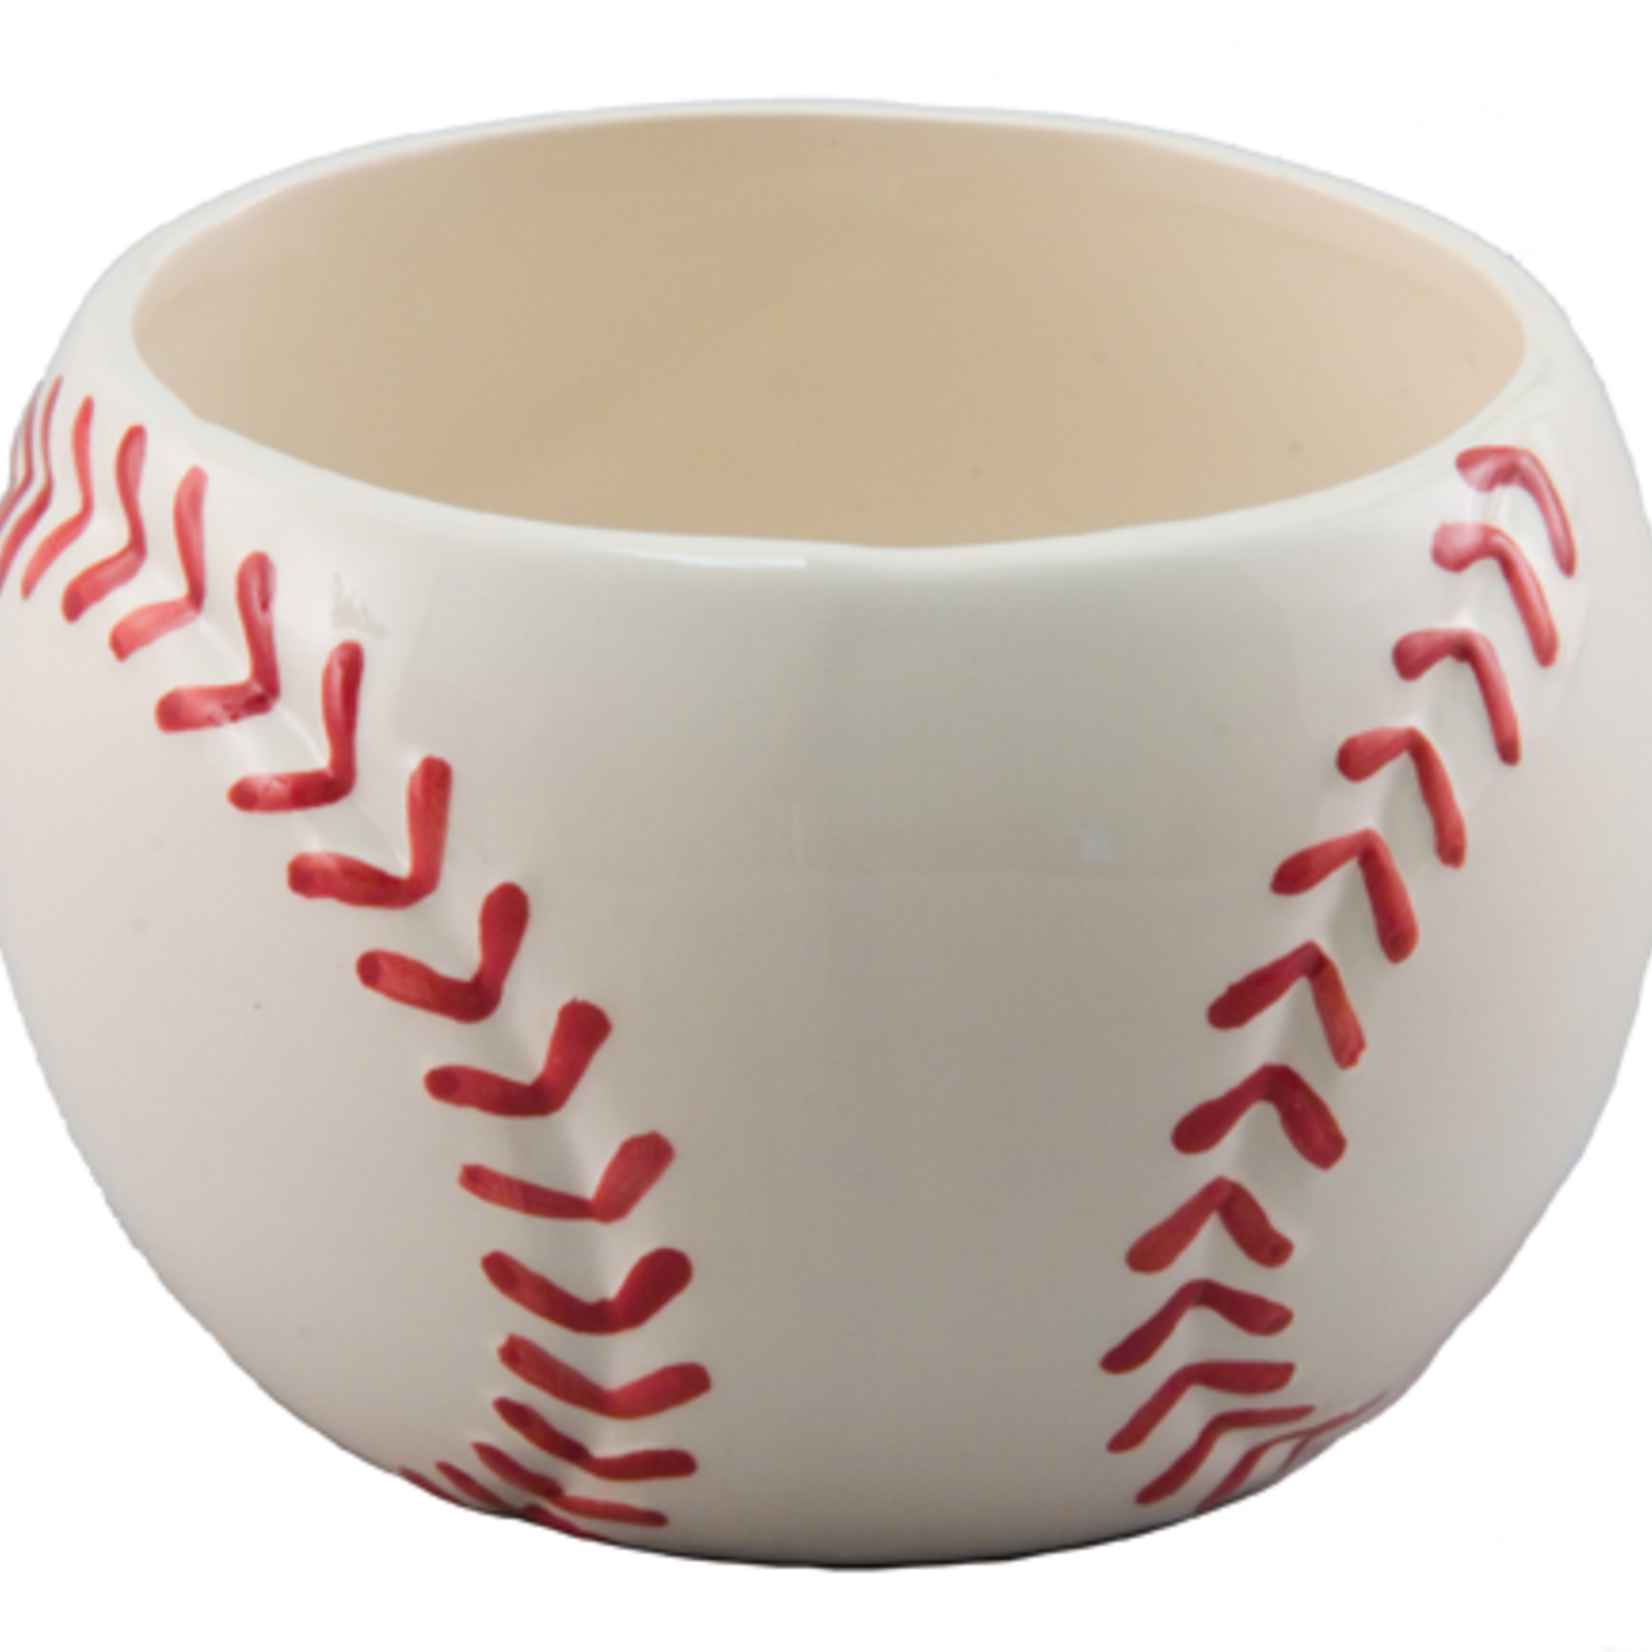 Ceramic Baseball planter